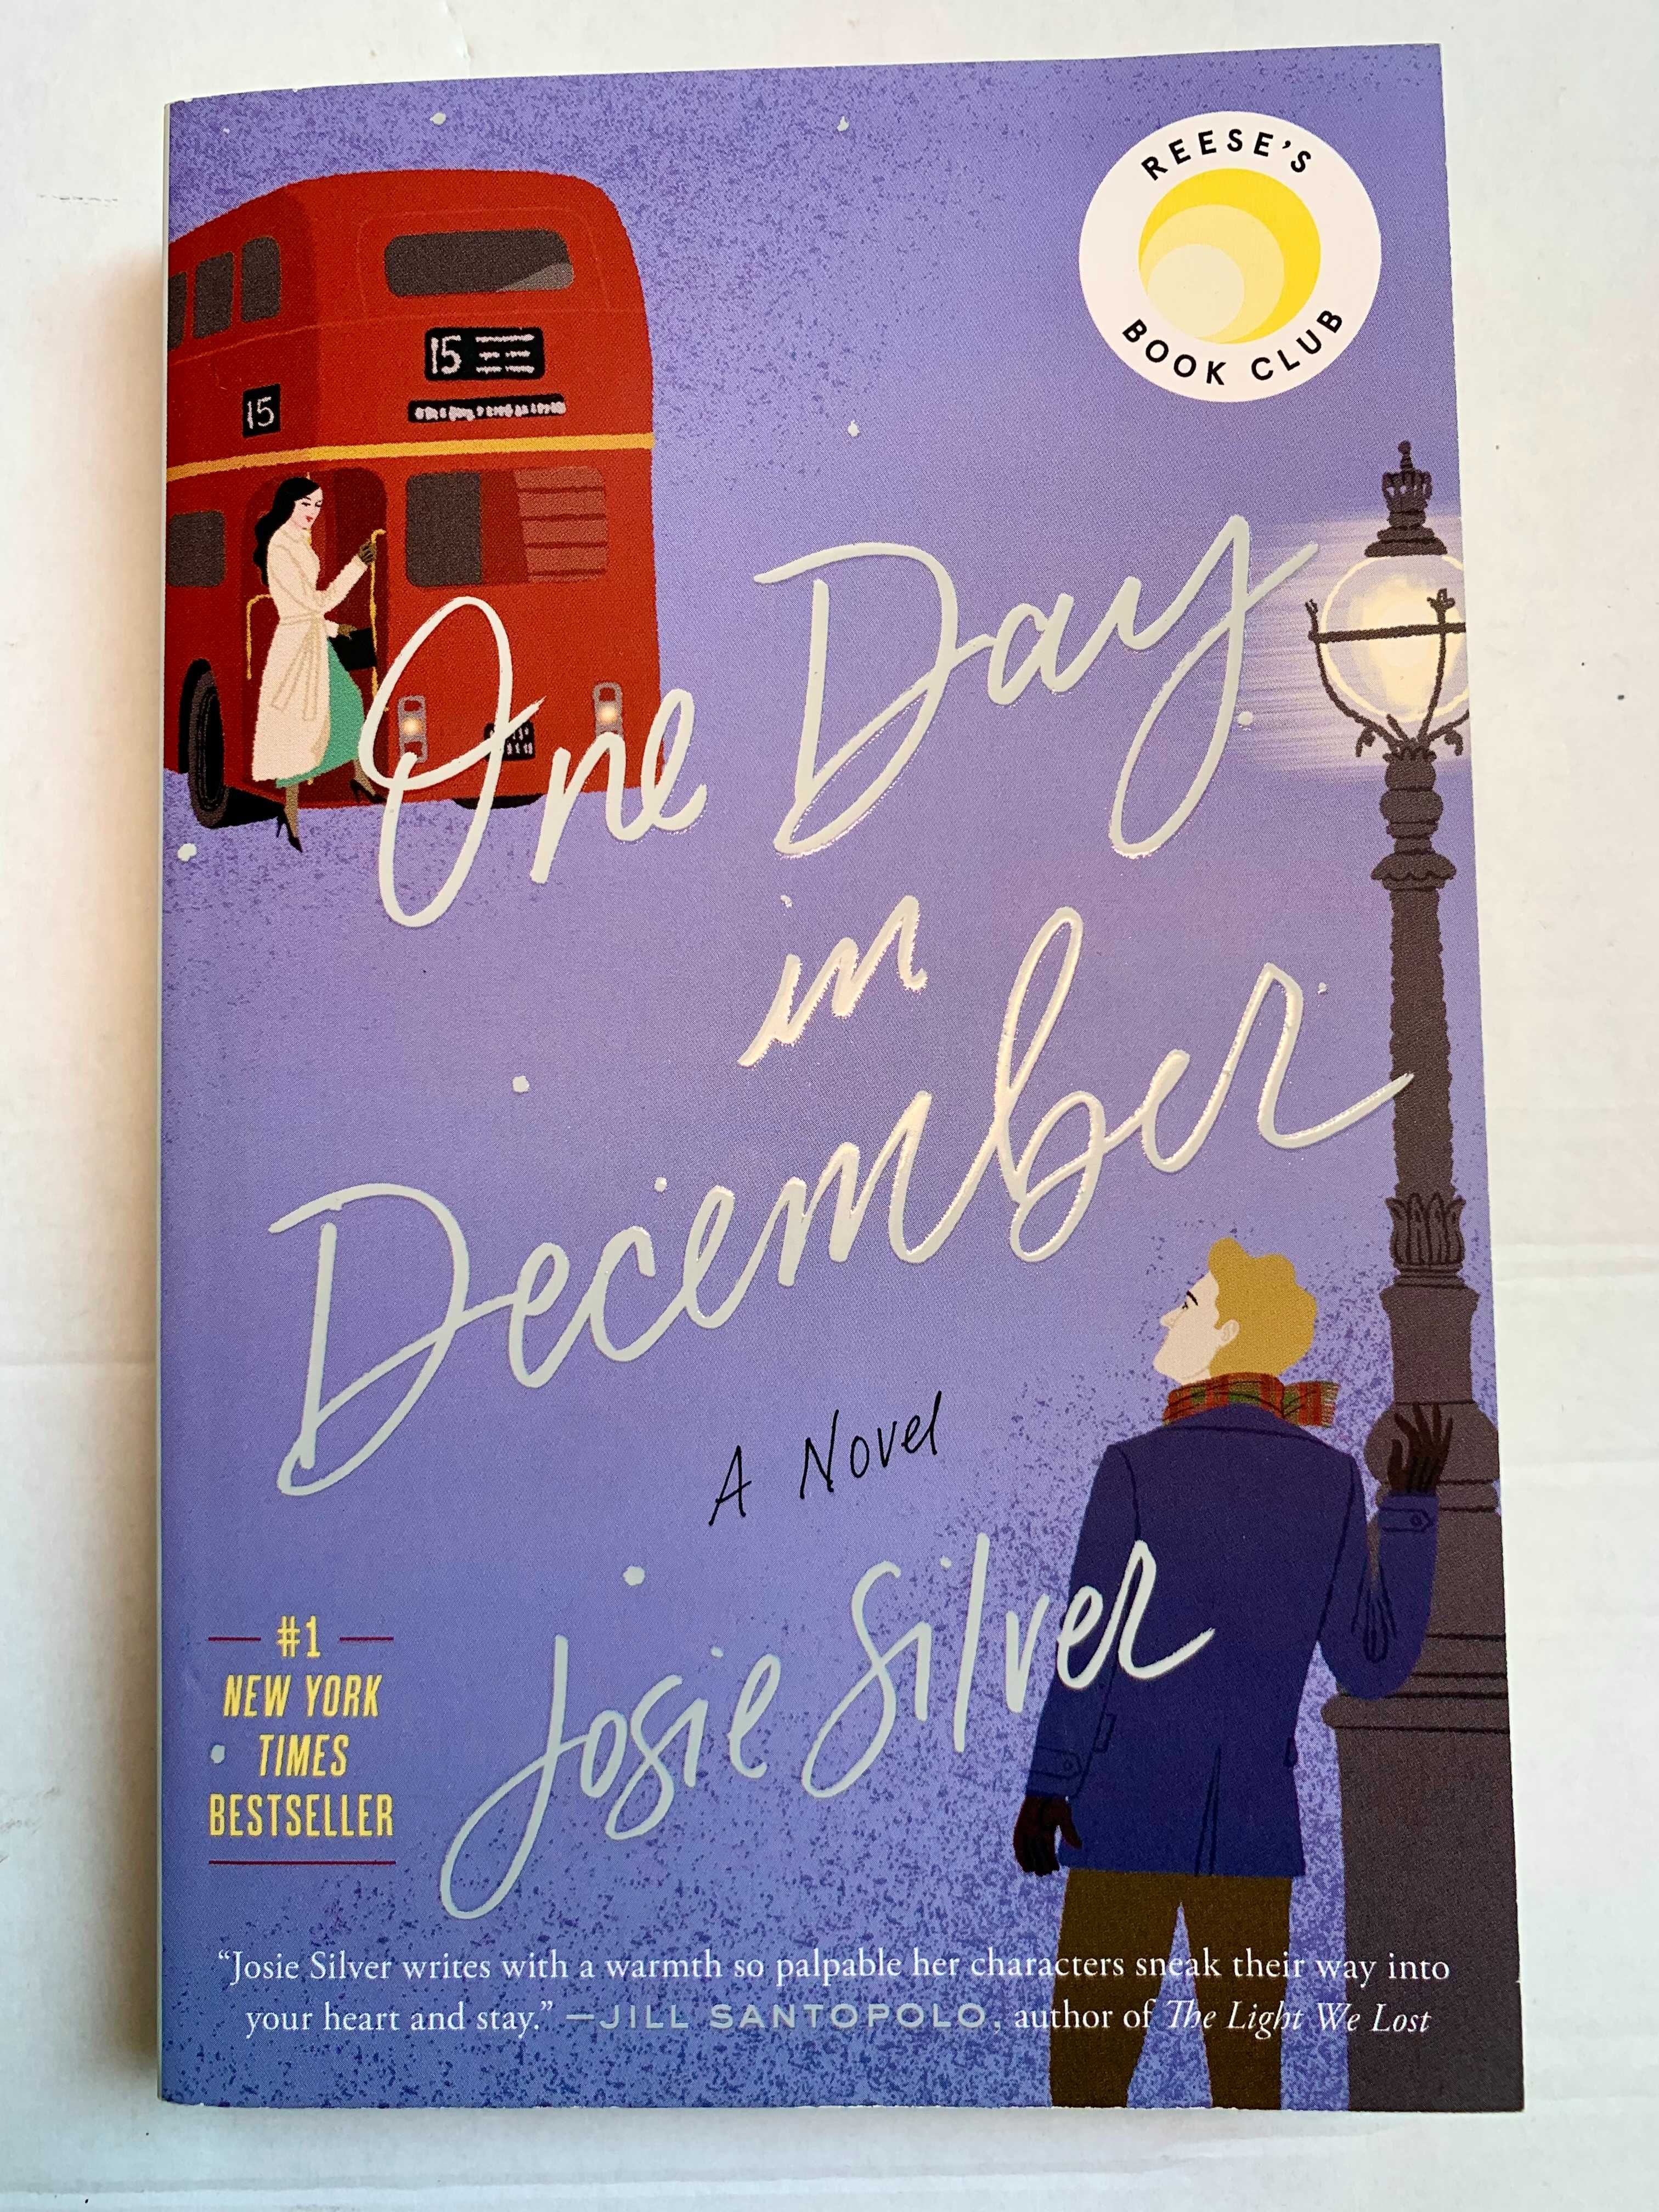 Angielska książka "One day in december" - Josie Silver